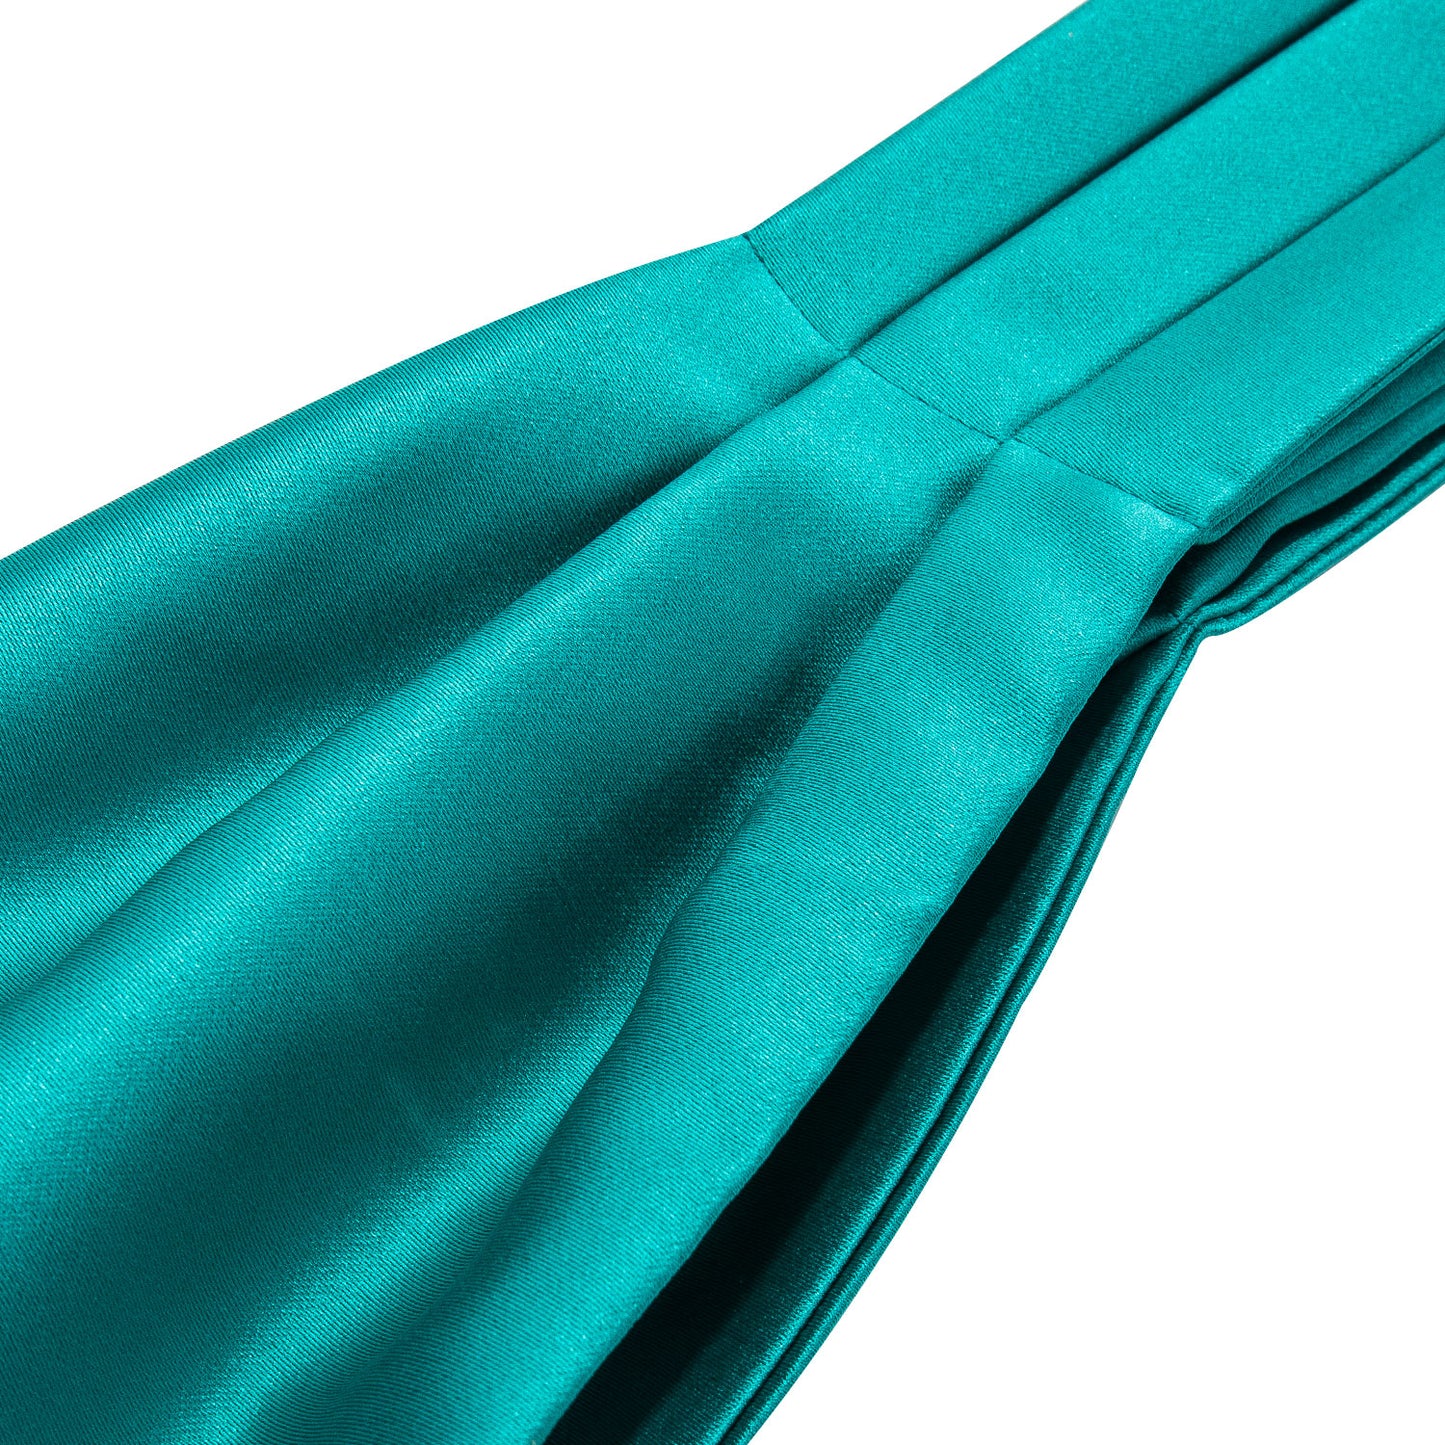 Victorian Ascot Silky Plain Satin Day Cravat Set [Turquoise]